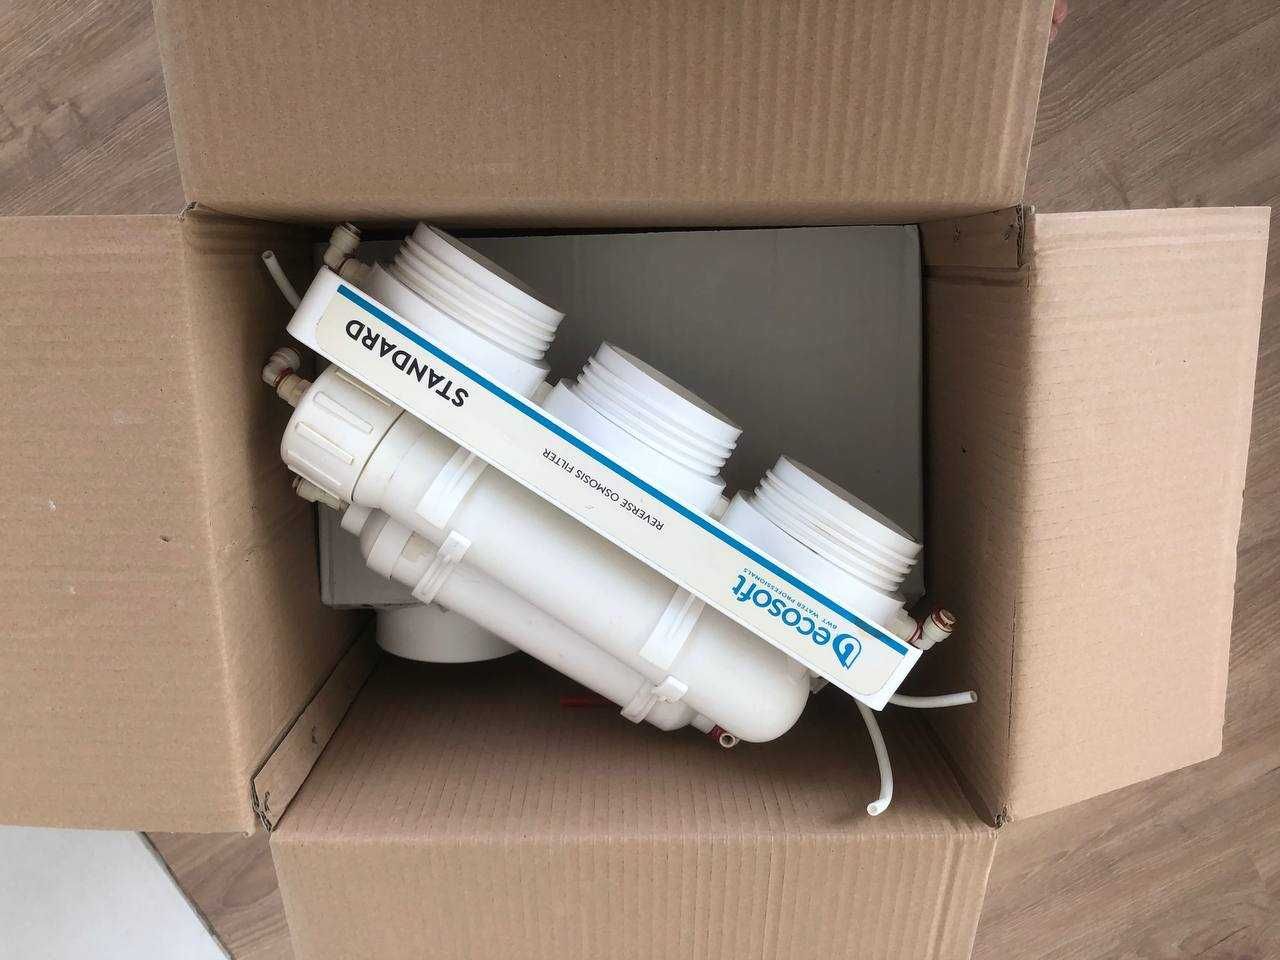 Фільтр зворотного осмосу Ecosoft Standard (Фільтр очистки води)